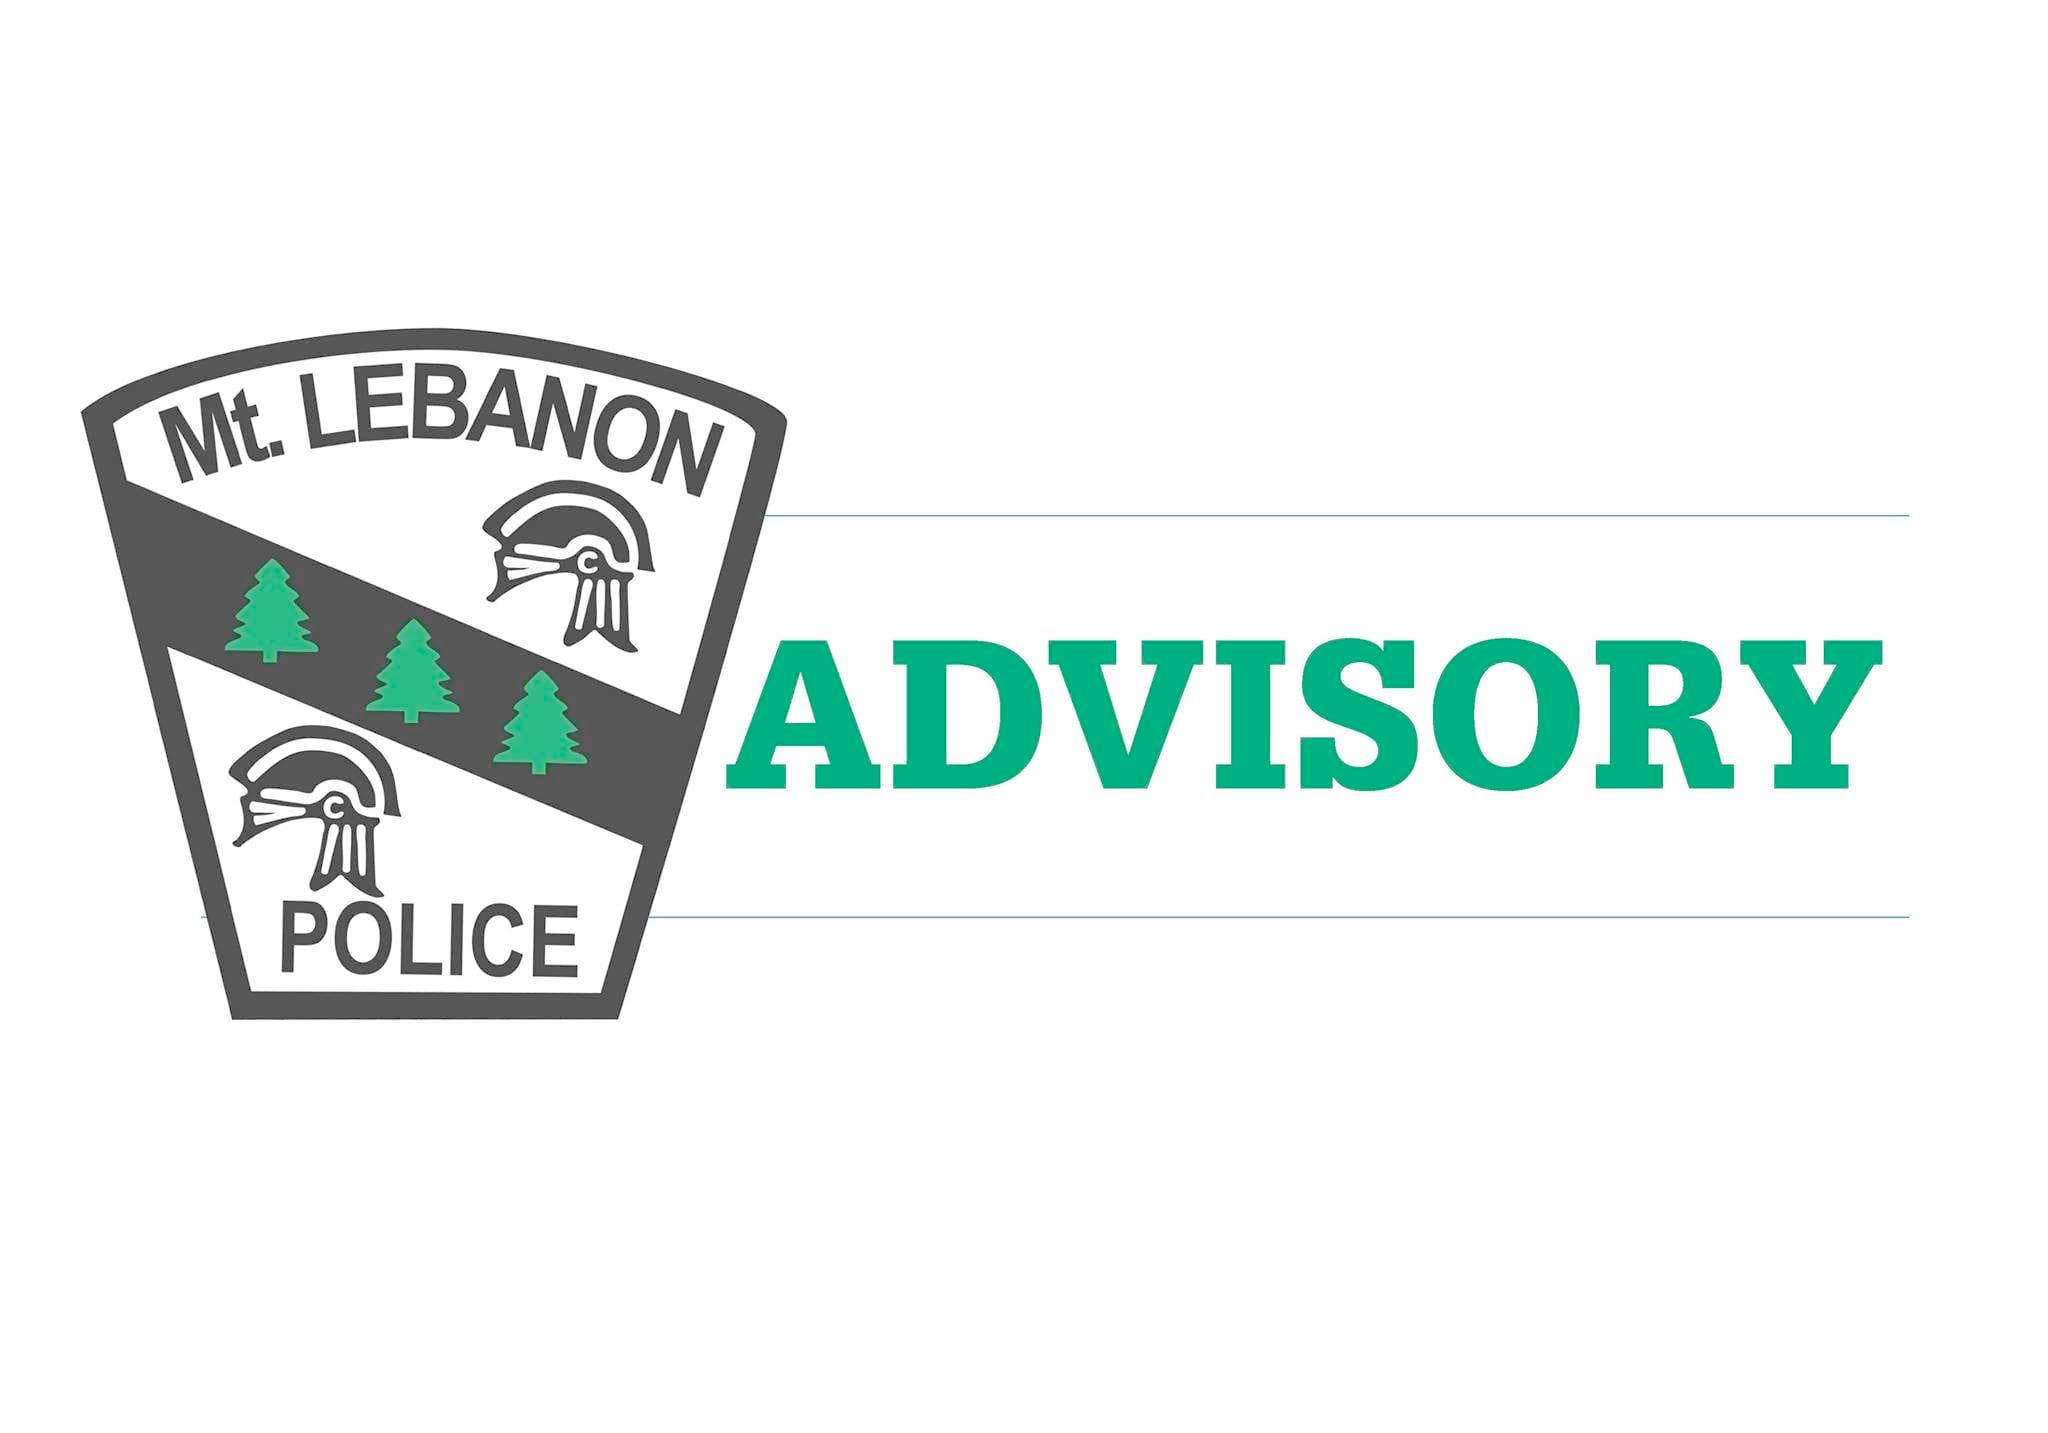 Mt. Lebanon Police | Advisory